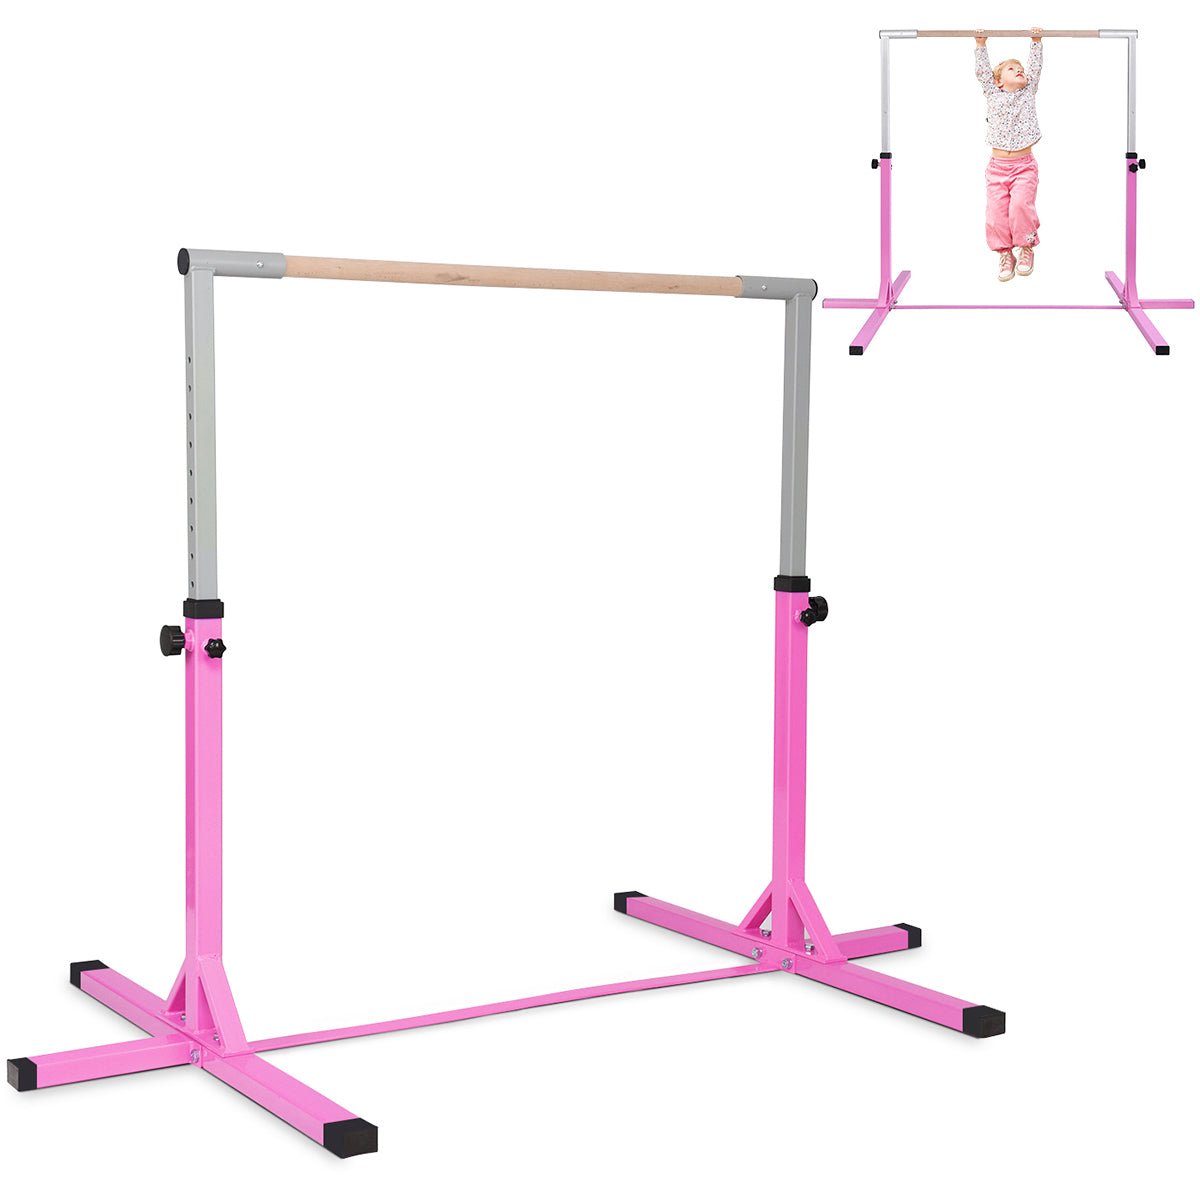 Shop the Pink Gymnastics Training Bar at Kids Mega Mart